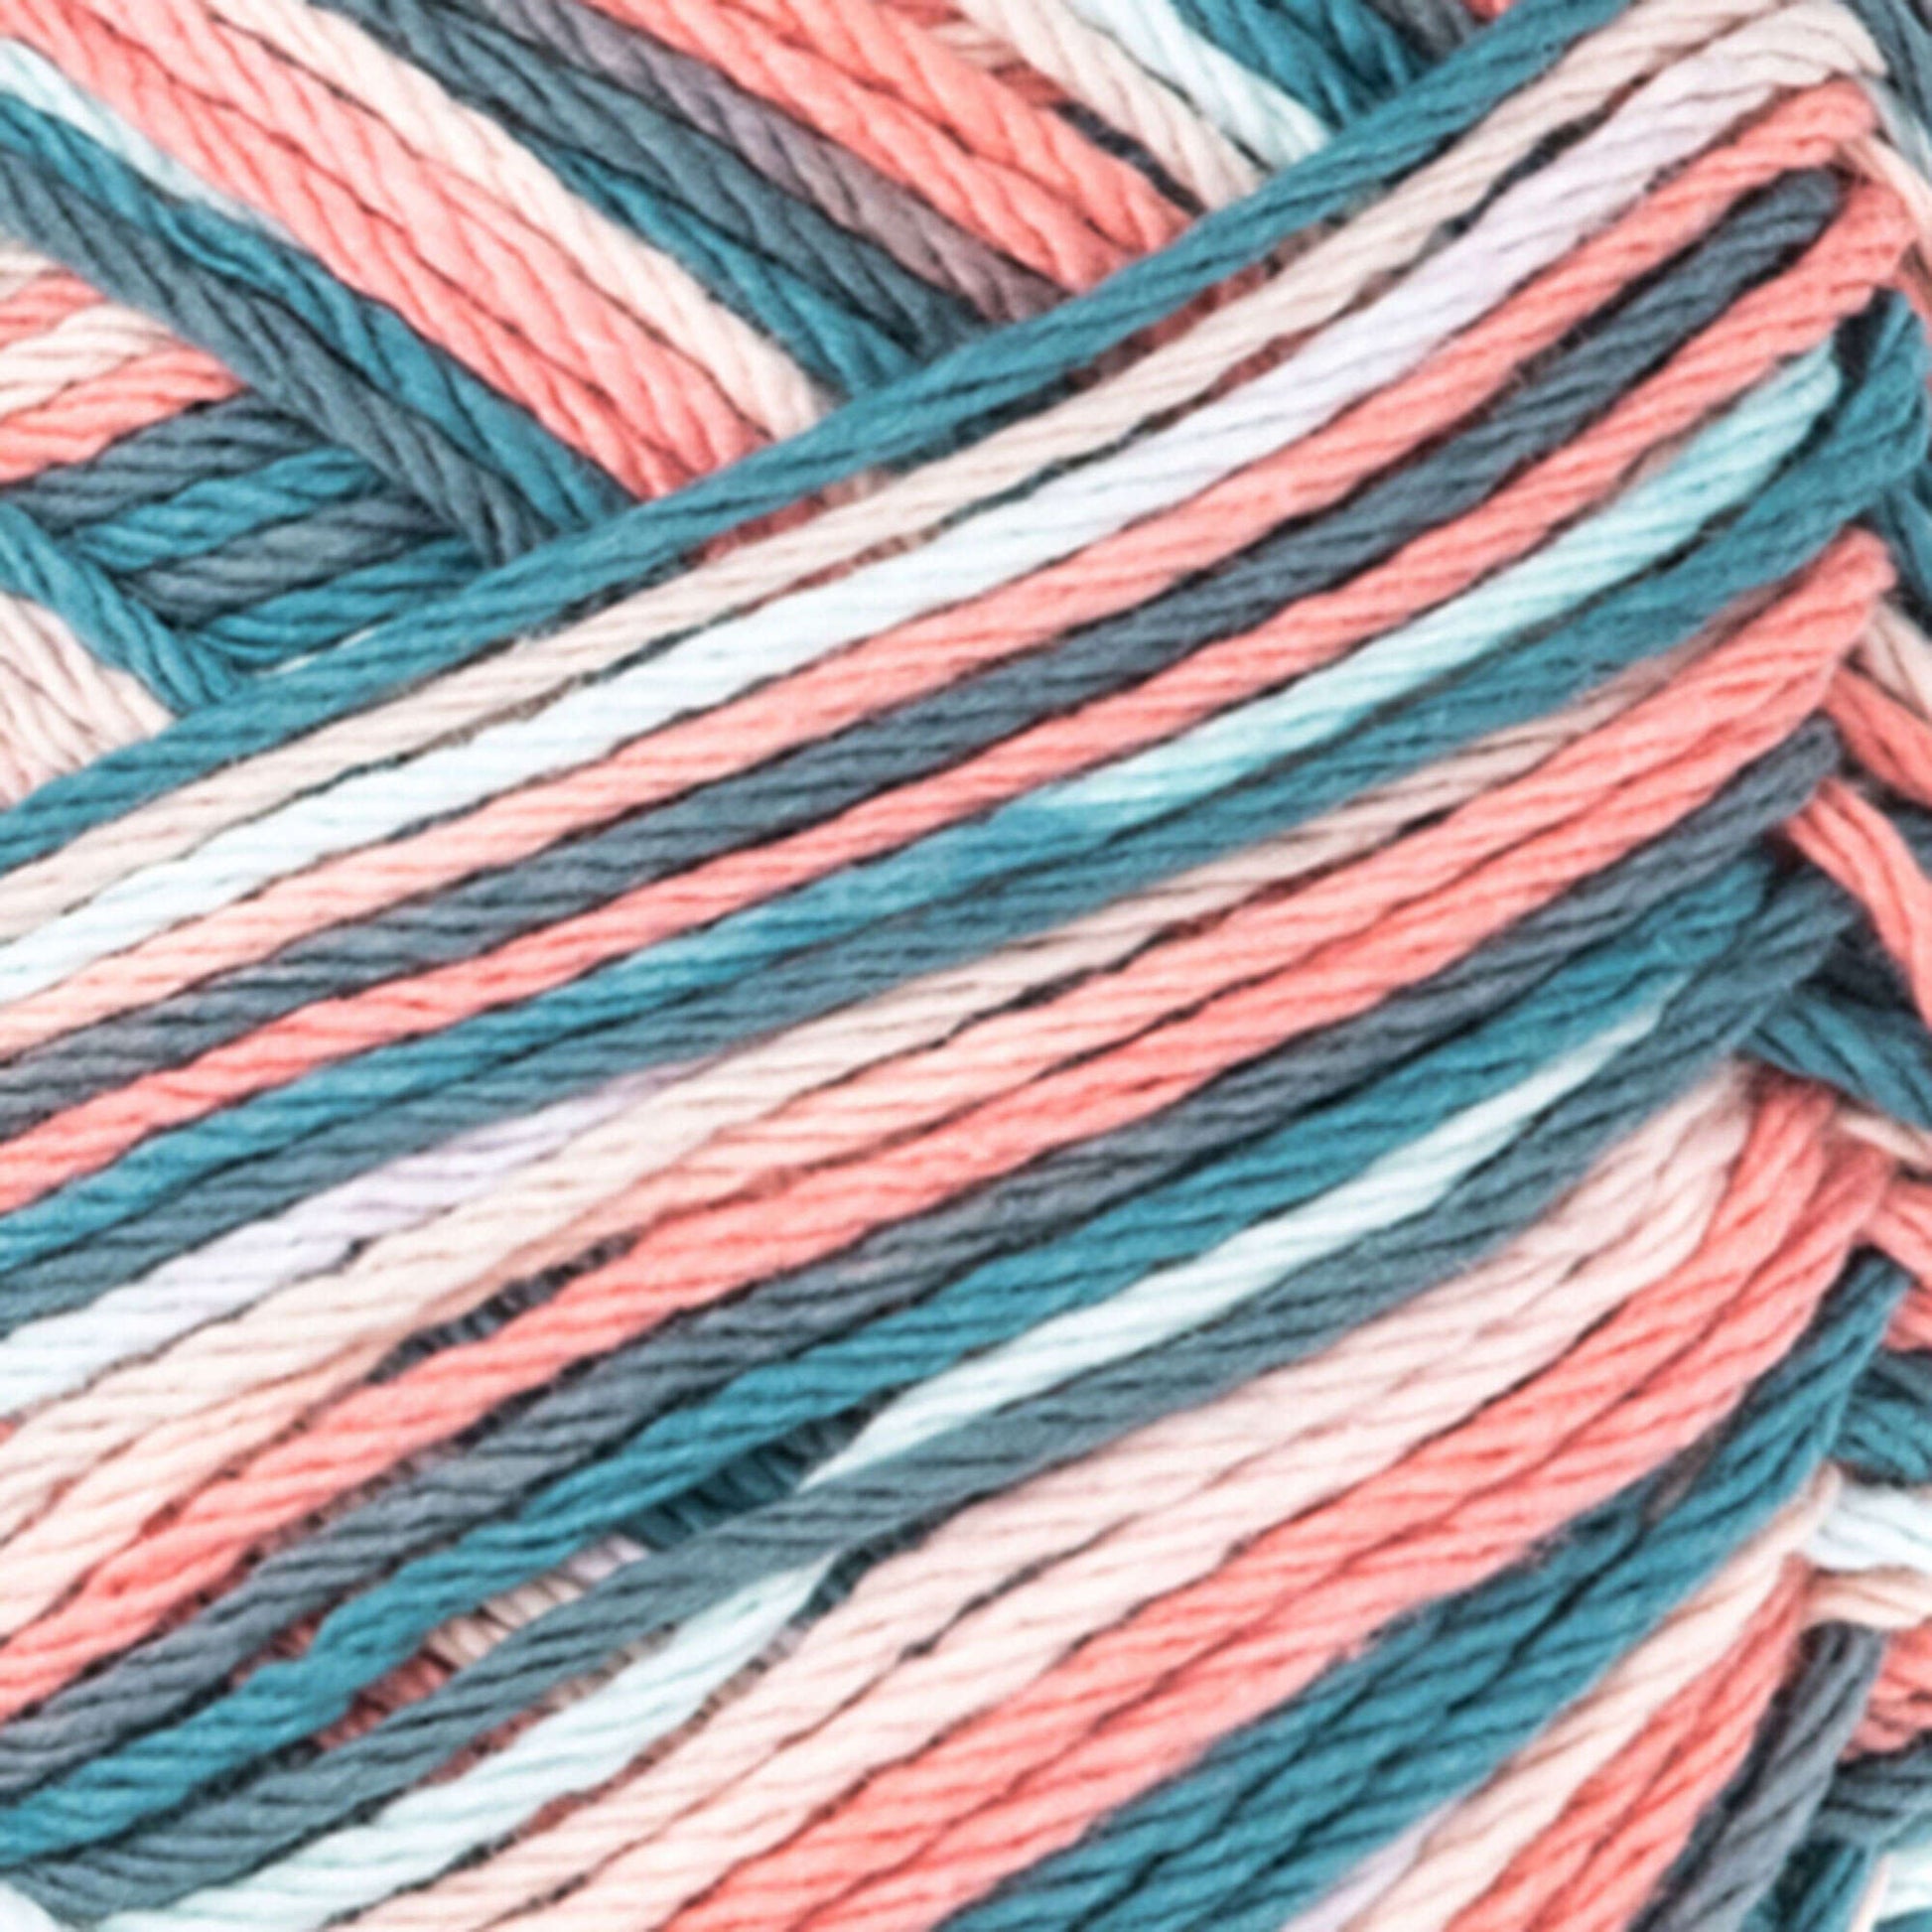 Bernat Handicrafter Cotton Ombres Yarn – 42,5g – Coral Seas Ombre